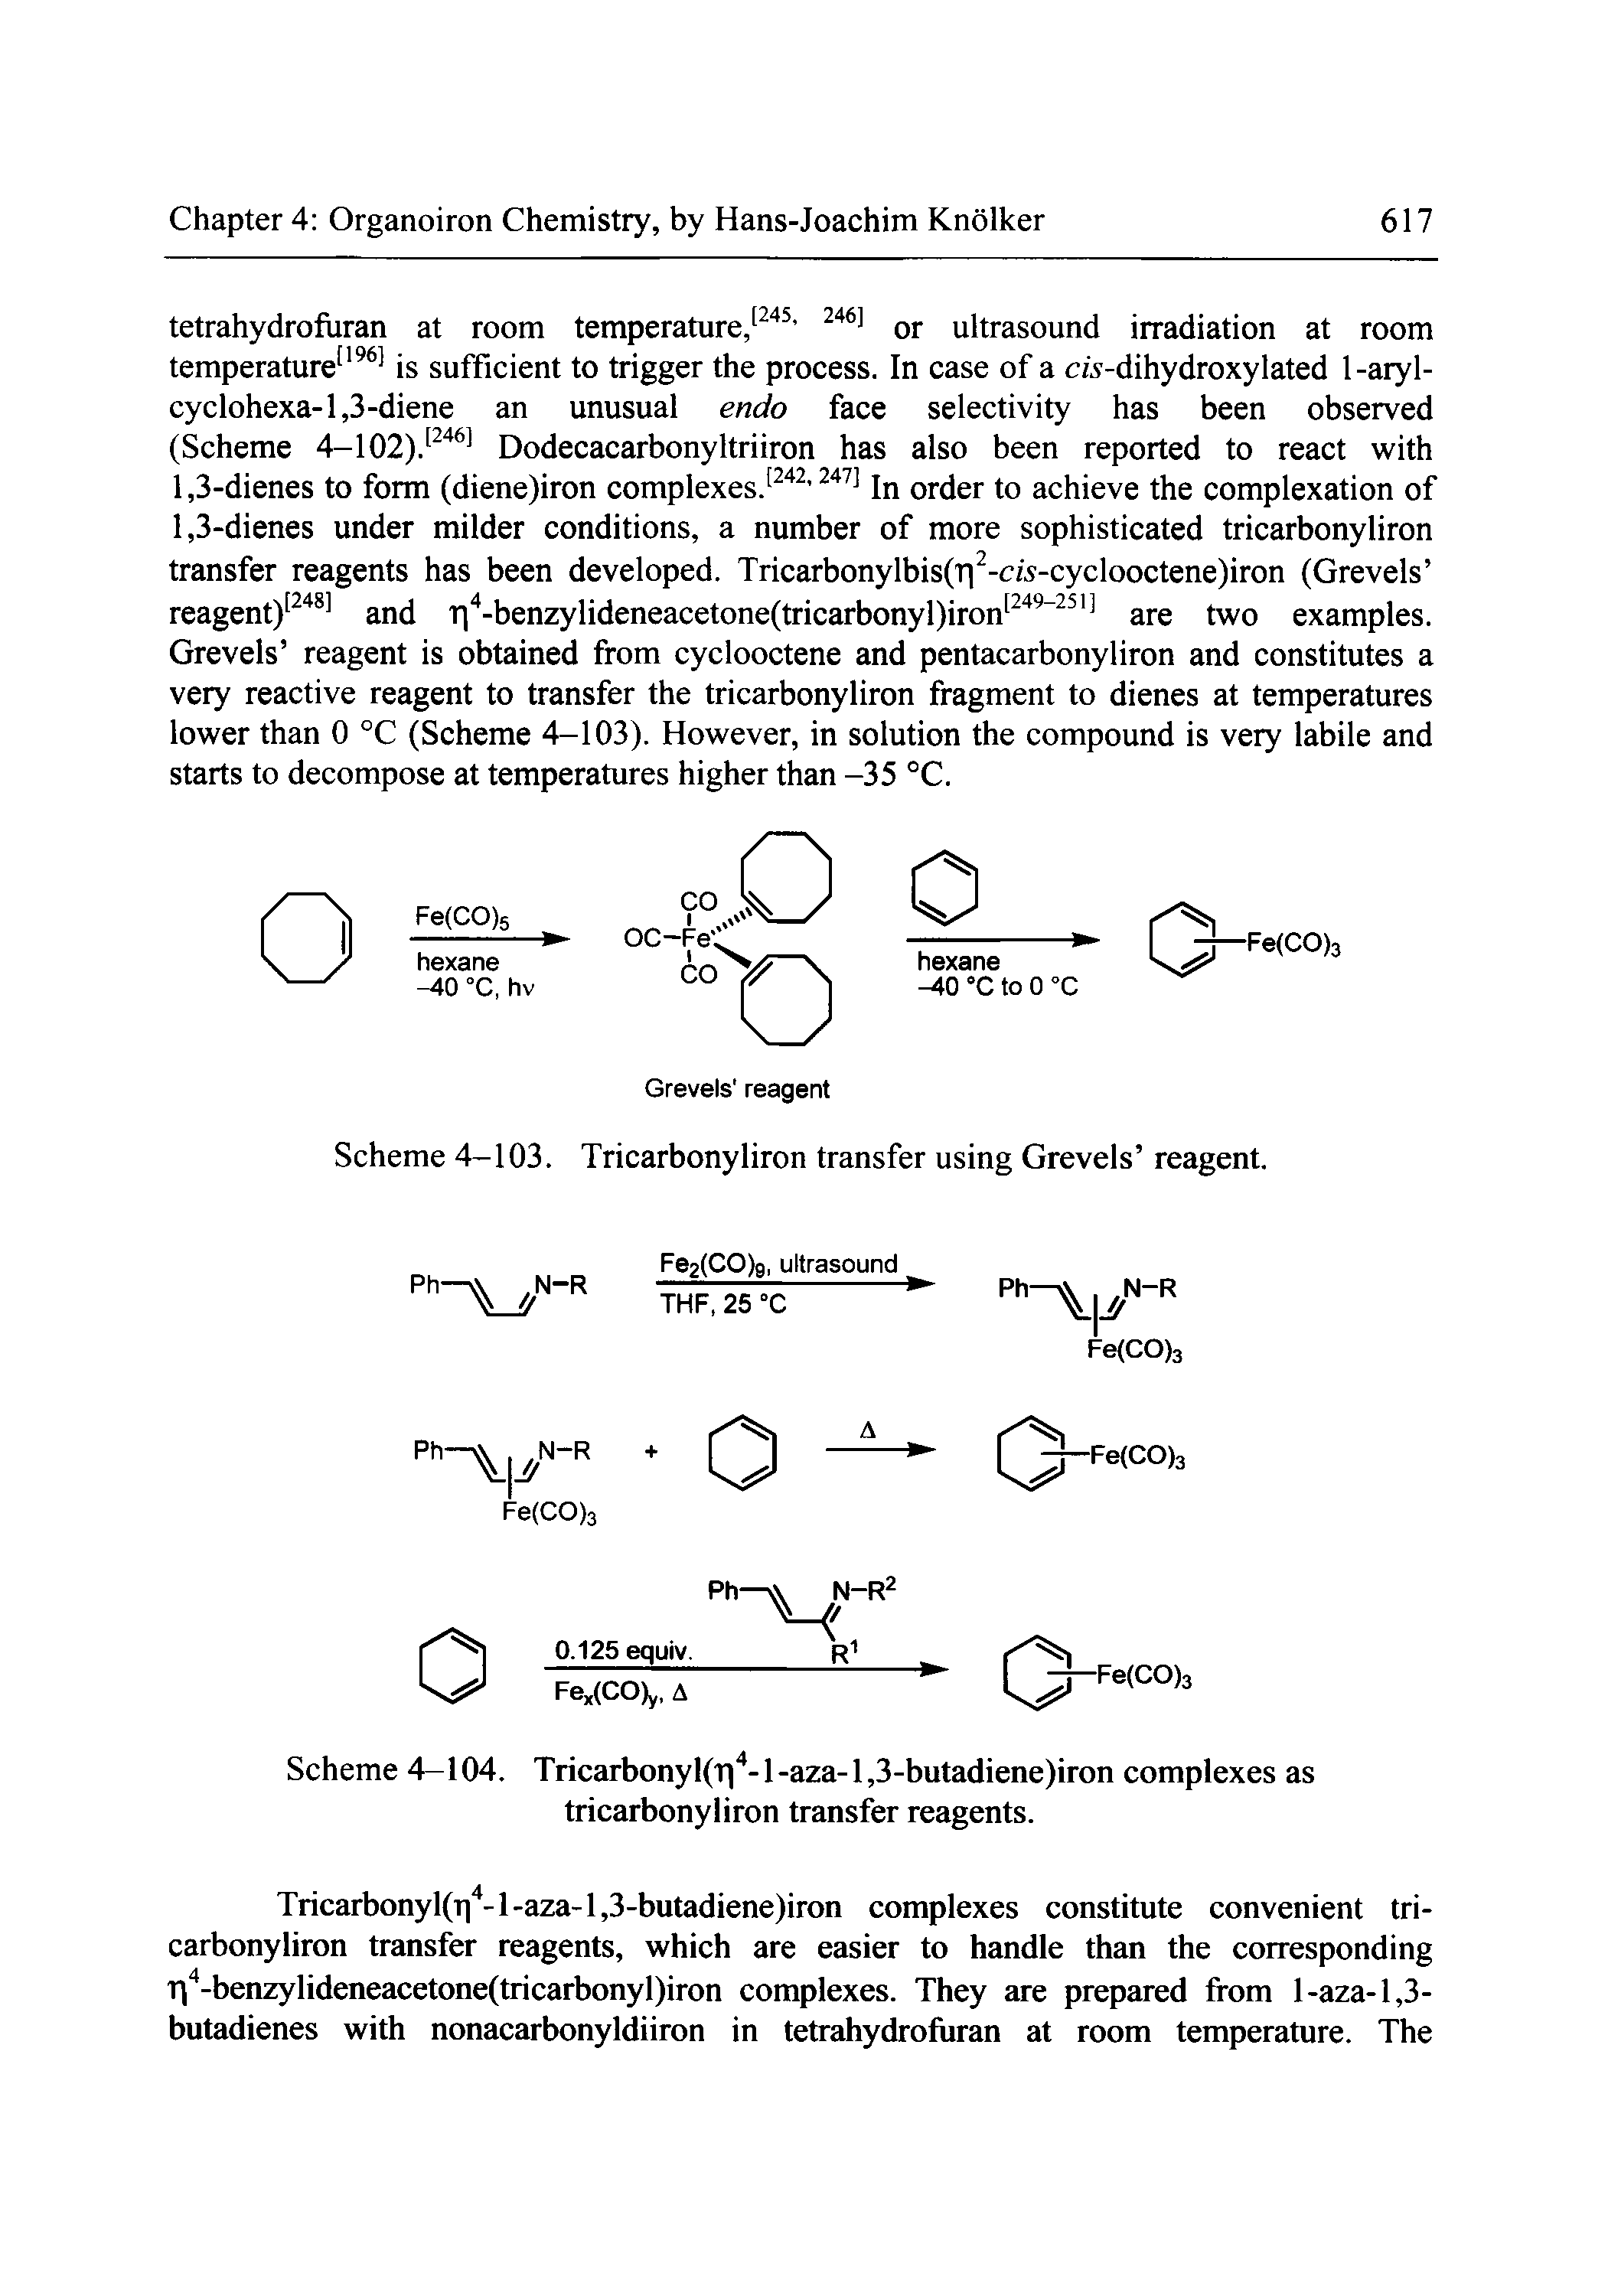 Scheme 4-103. Tricarbonyliron transfer using Grevels reagent.